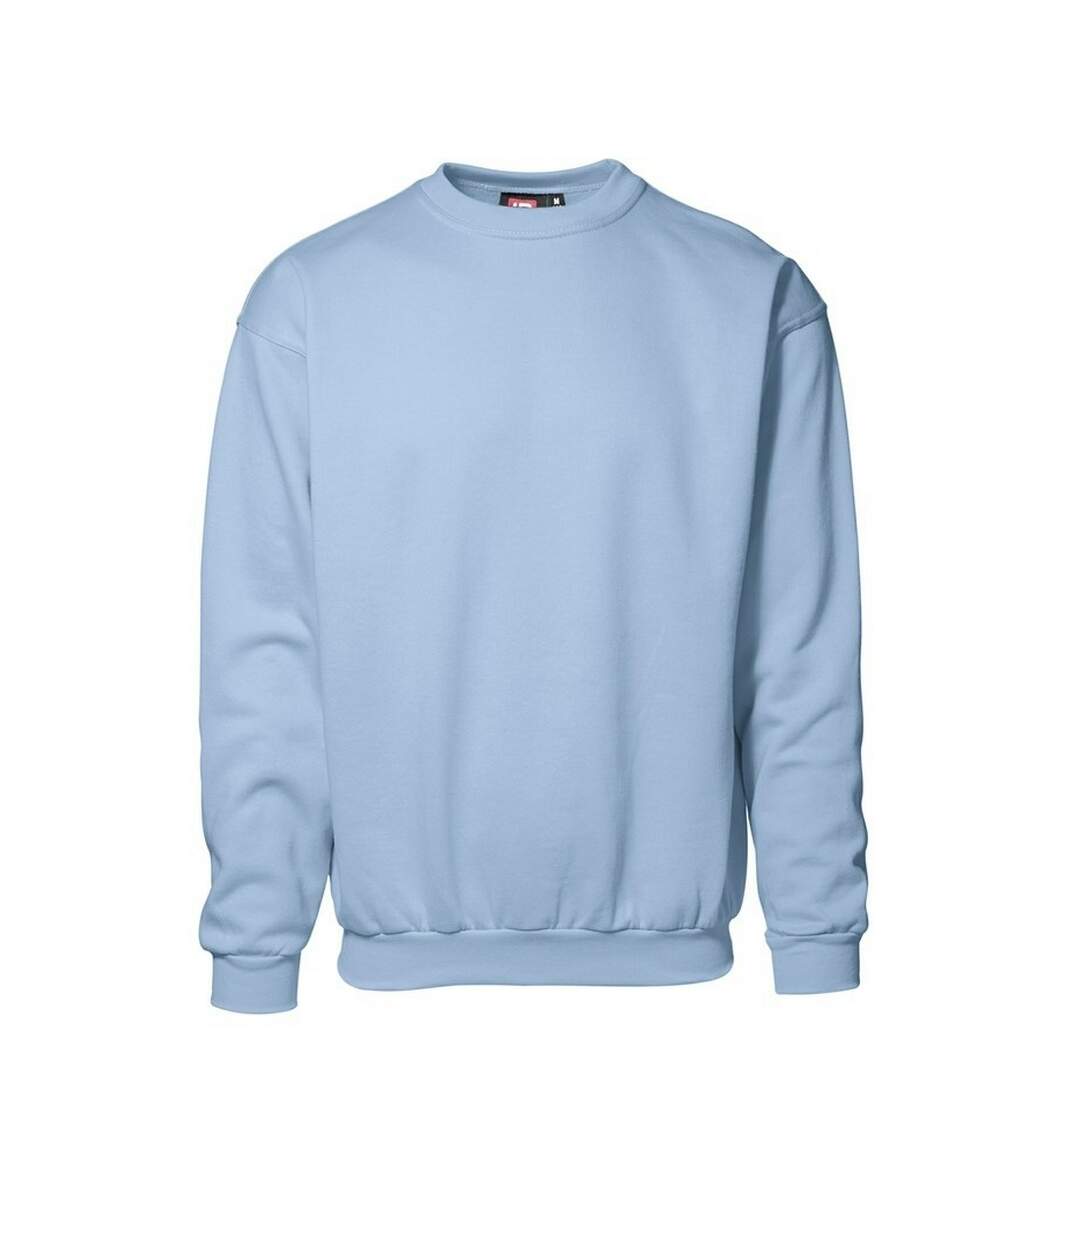 ID Unisex Classic Round Neck Sweatshirt (Light blue) - UTID275